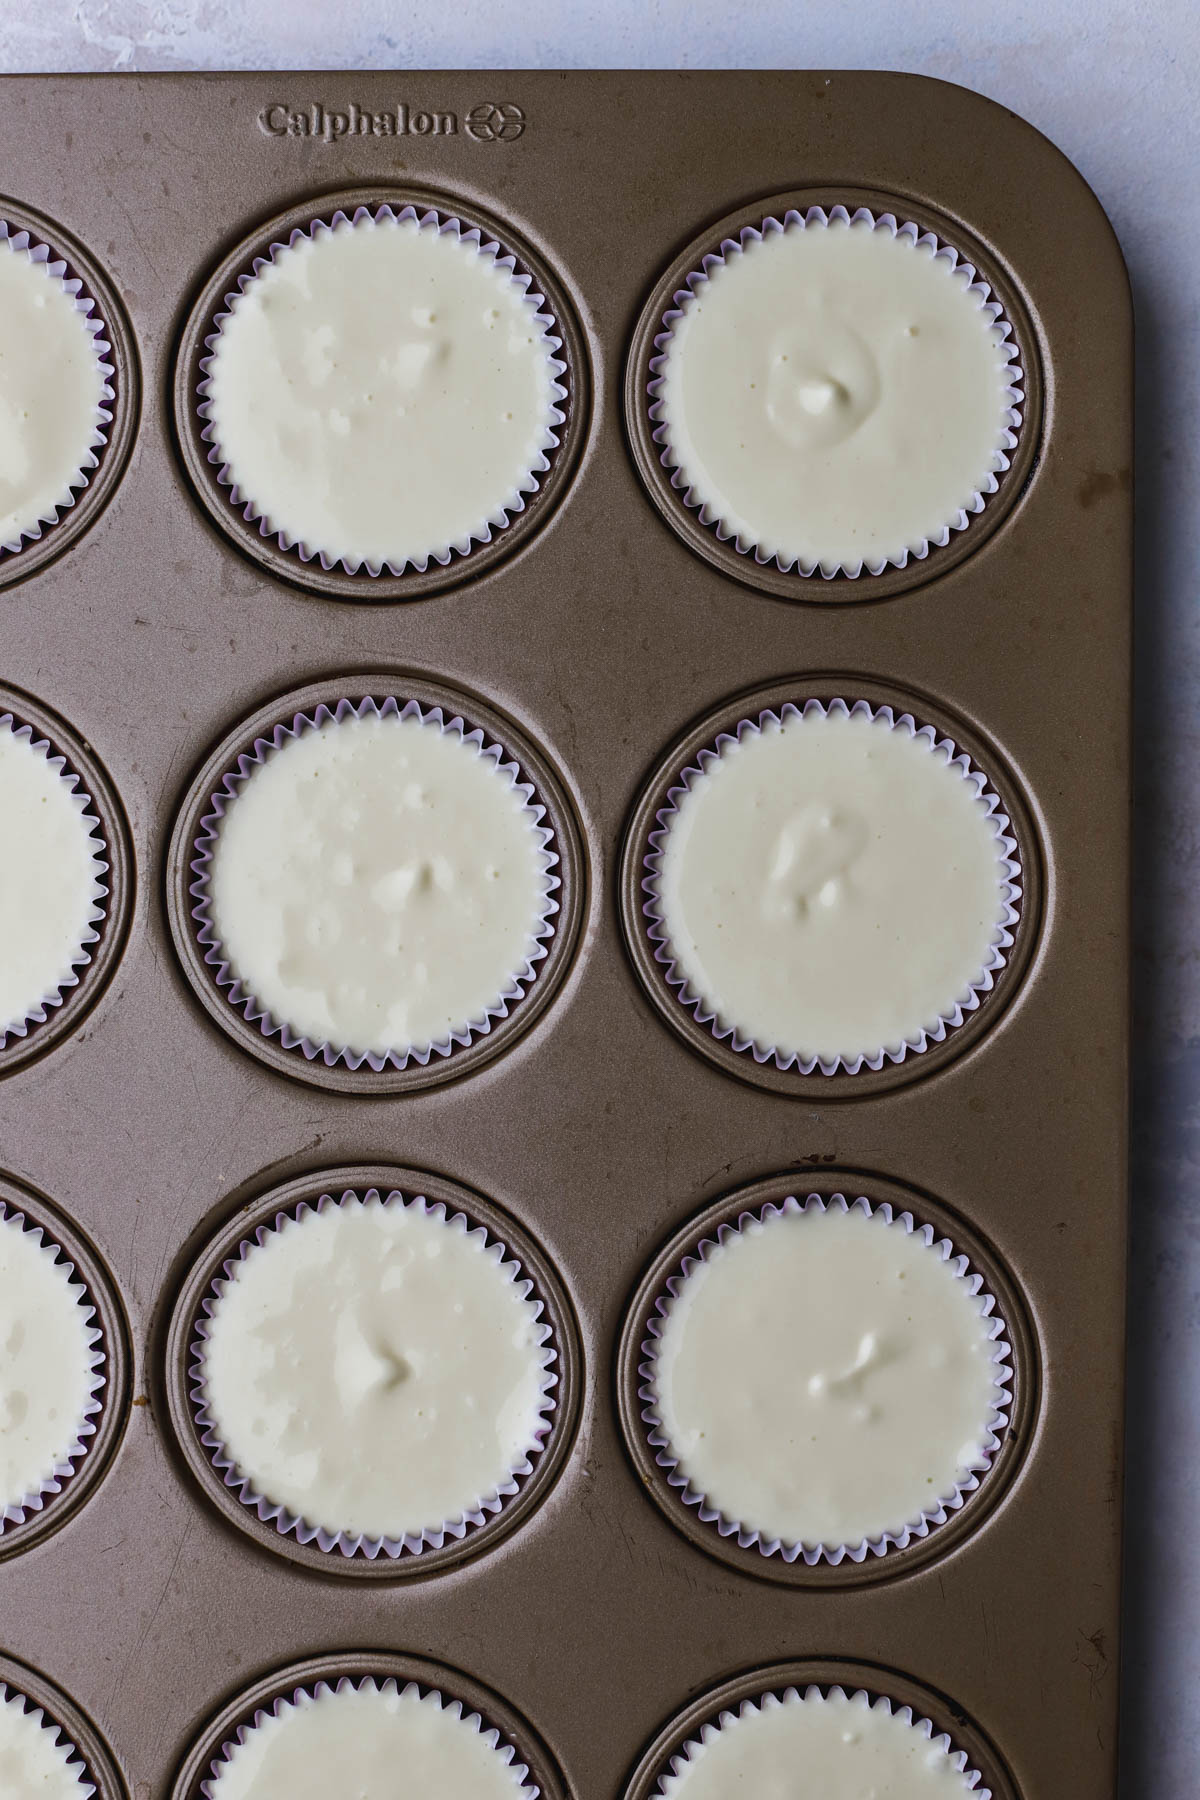 Vanilla cheesecake inside muffin mold.  